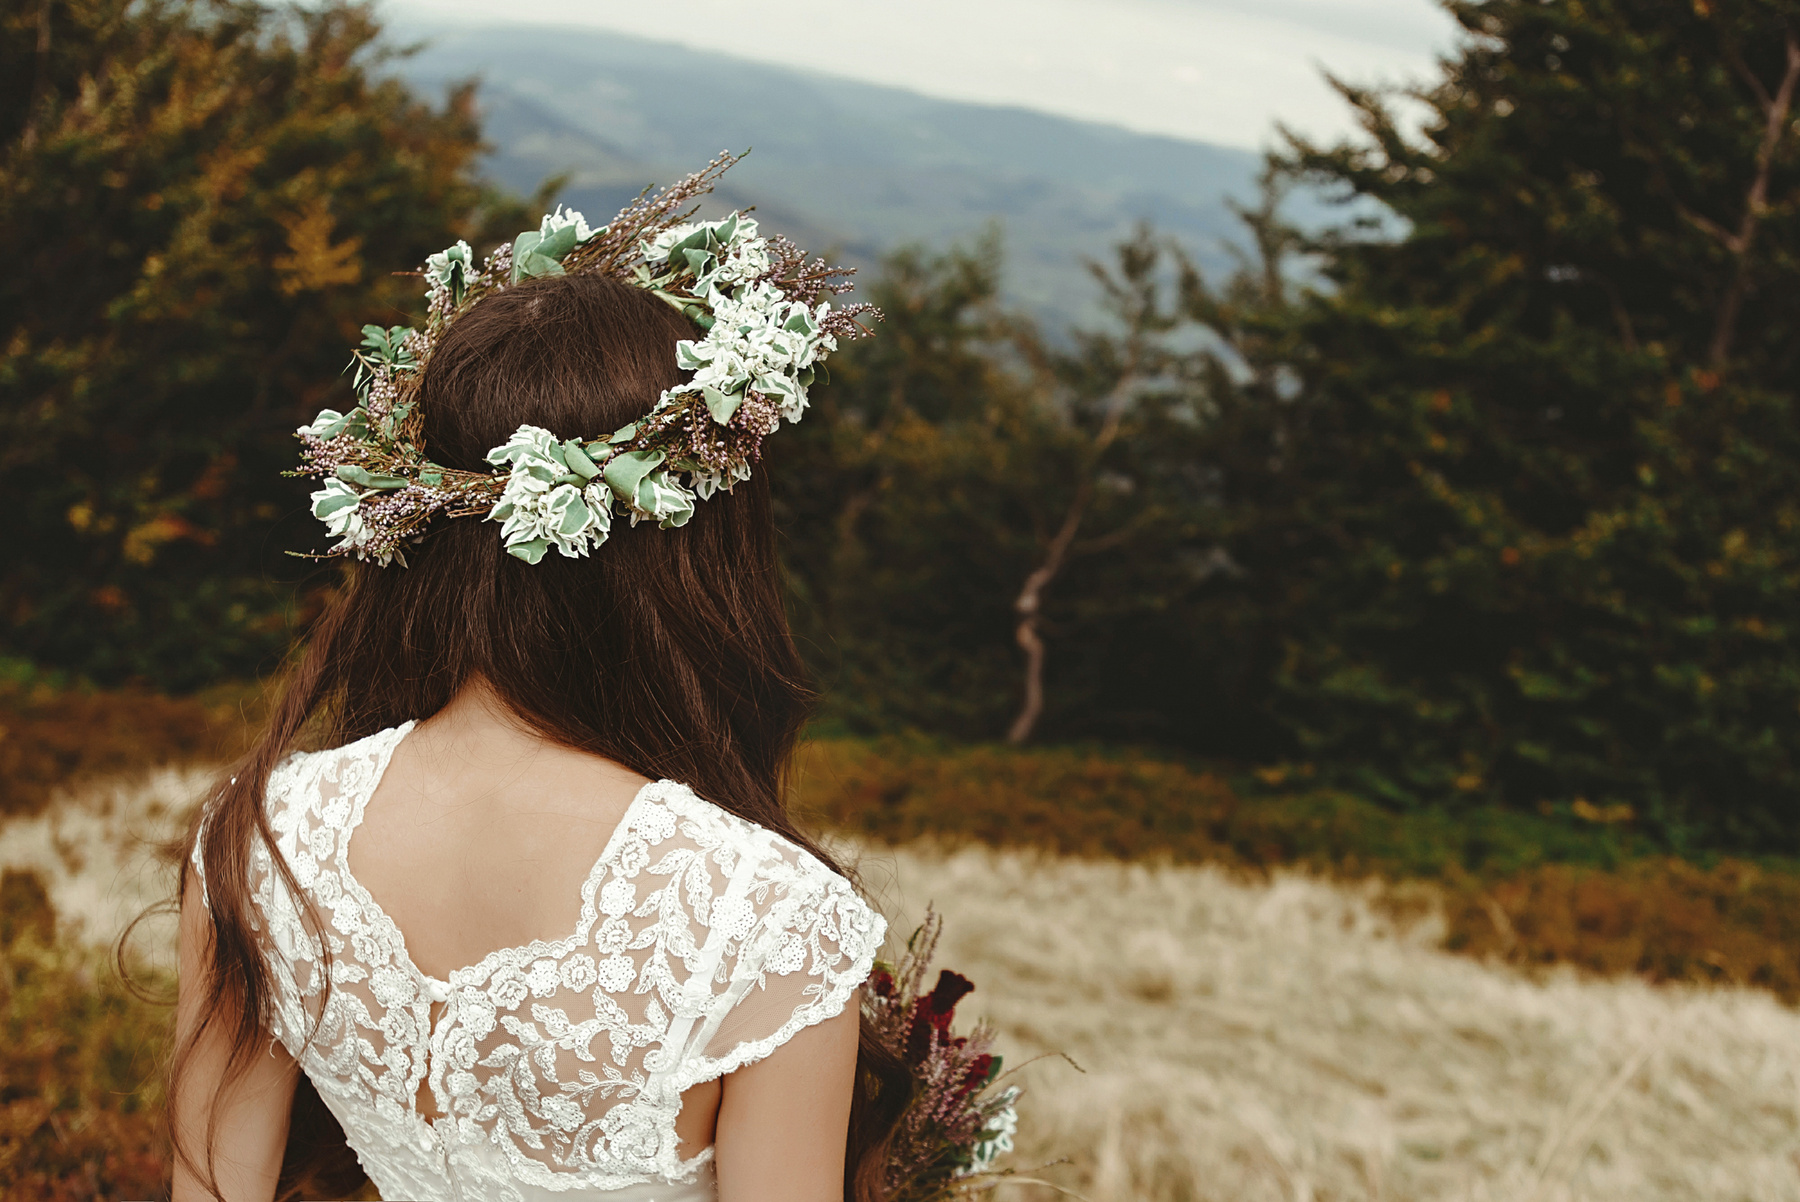 stylish bride posing with bouquet on background of forest, luxury boho wedding at mountains